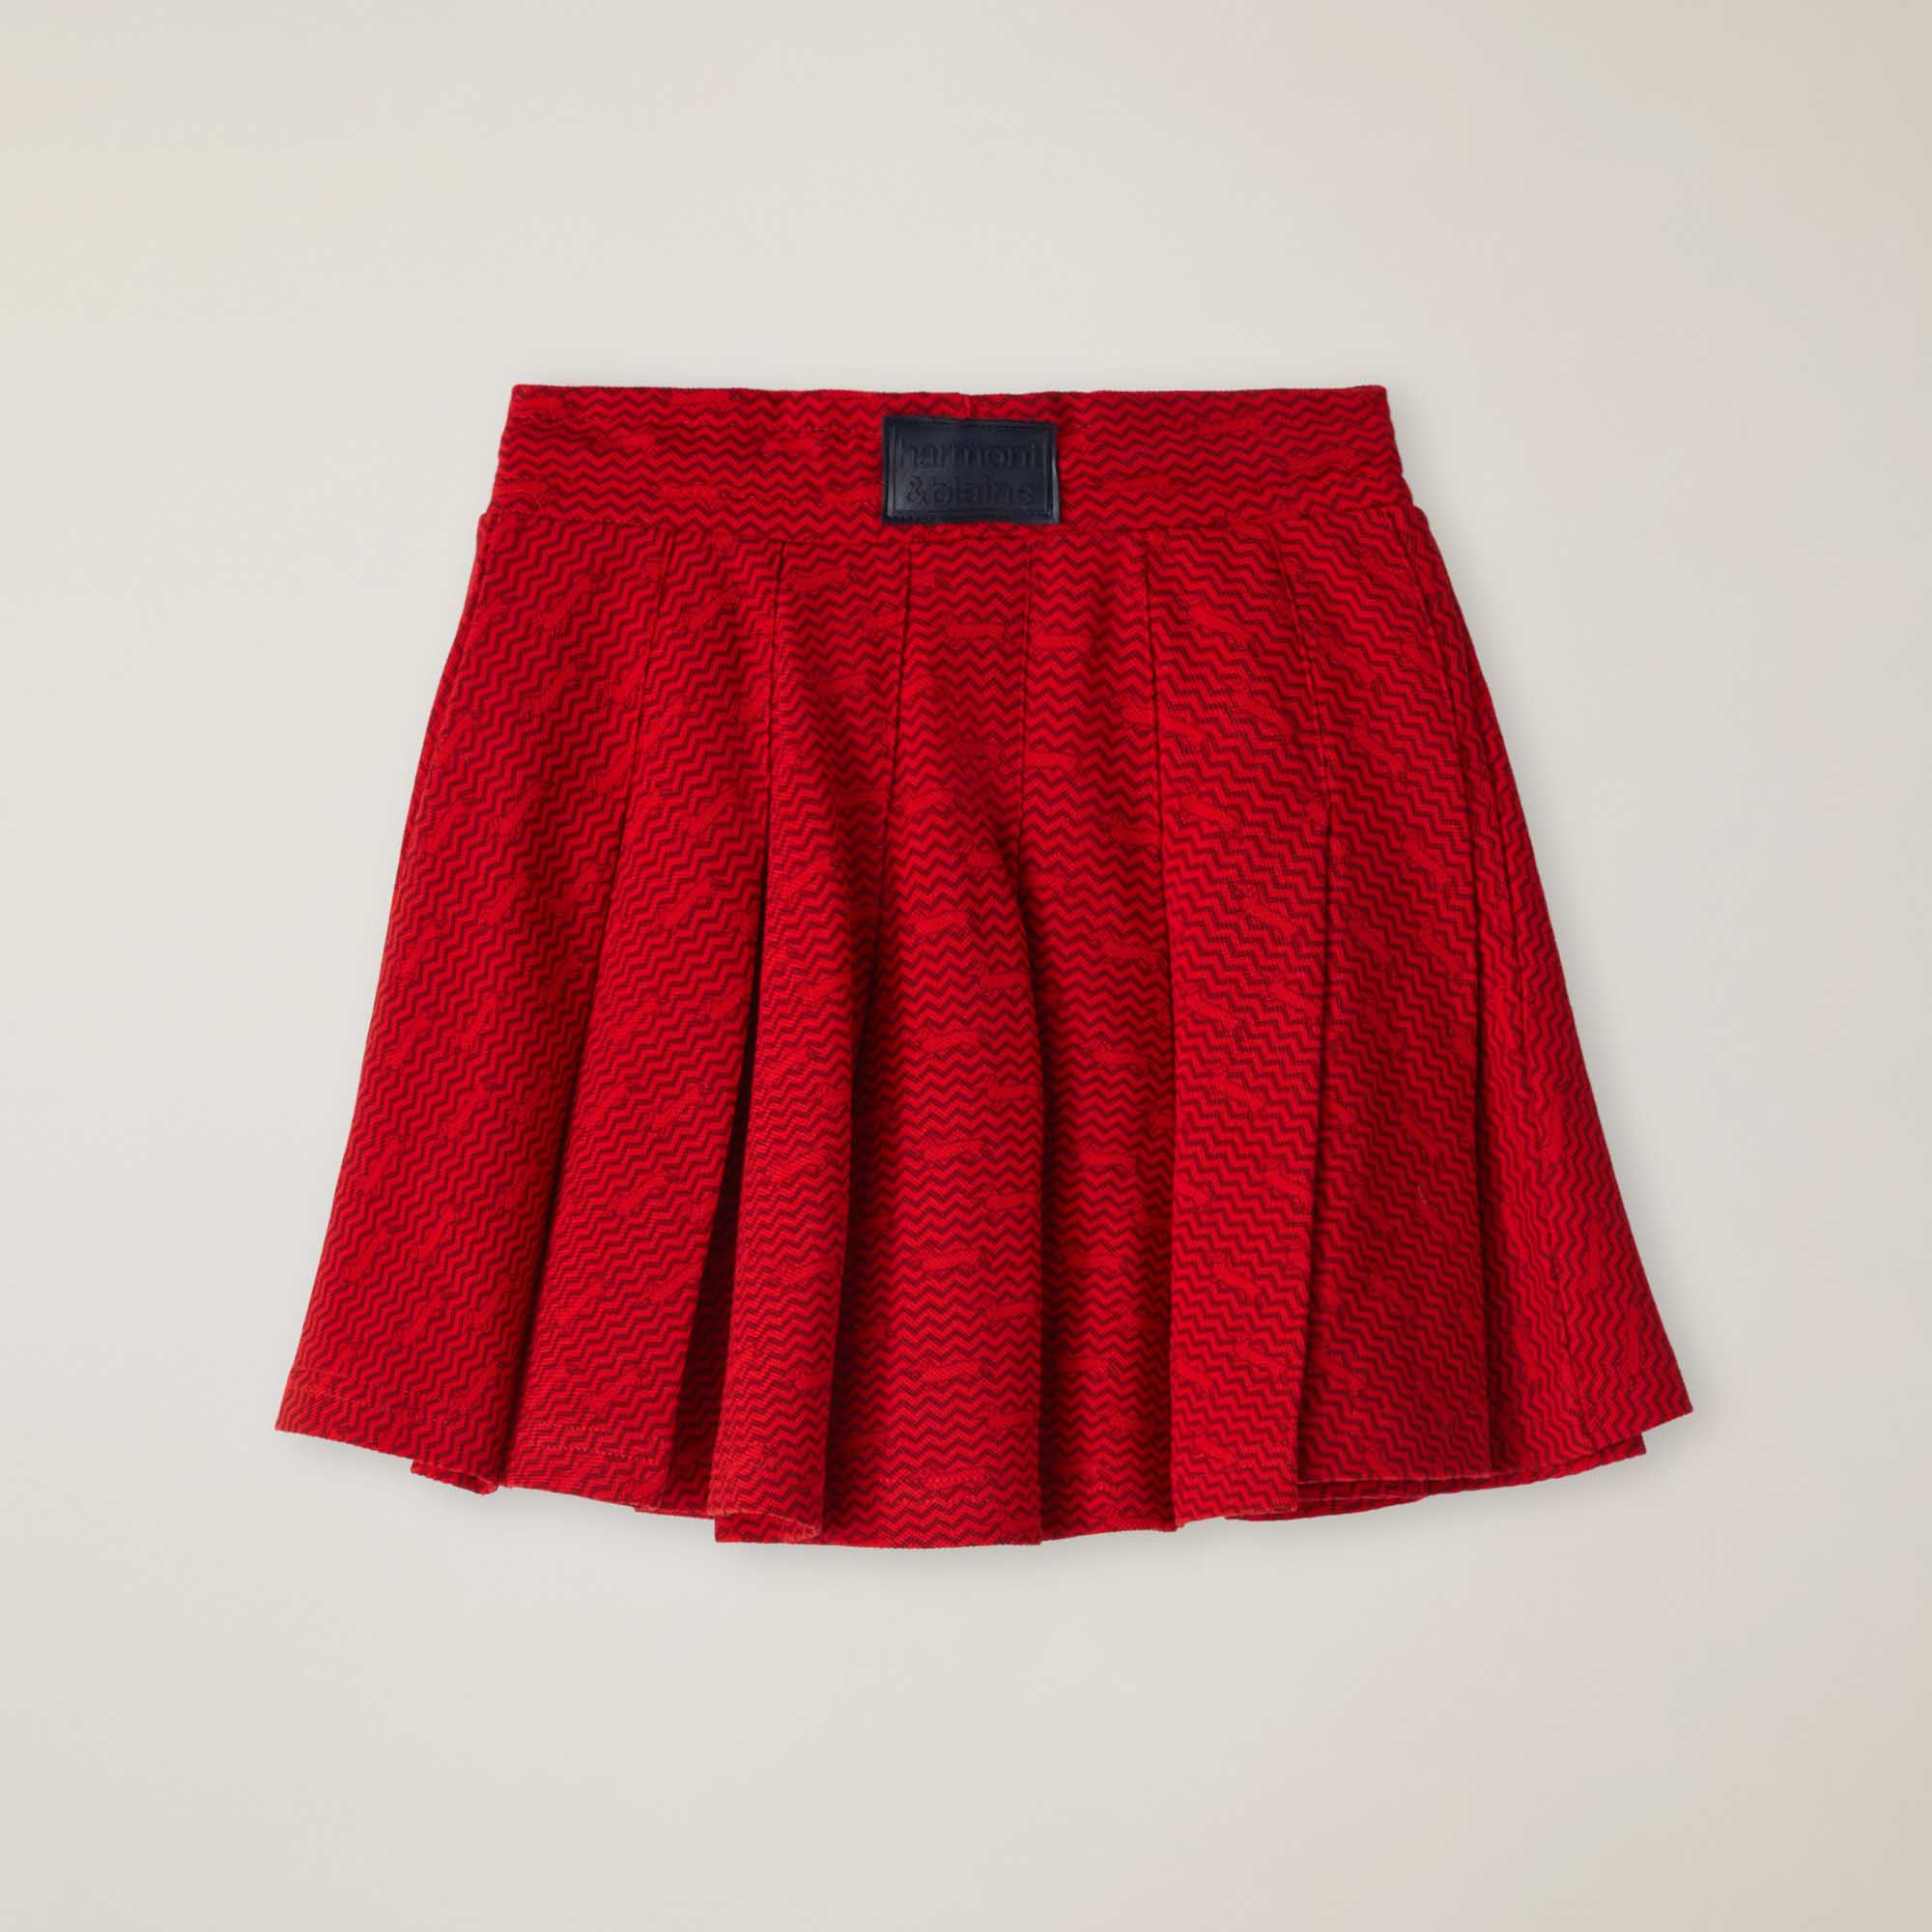 Micro-patterned print skirt